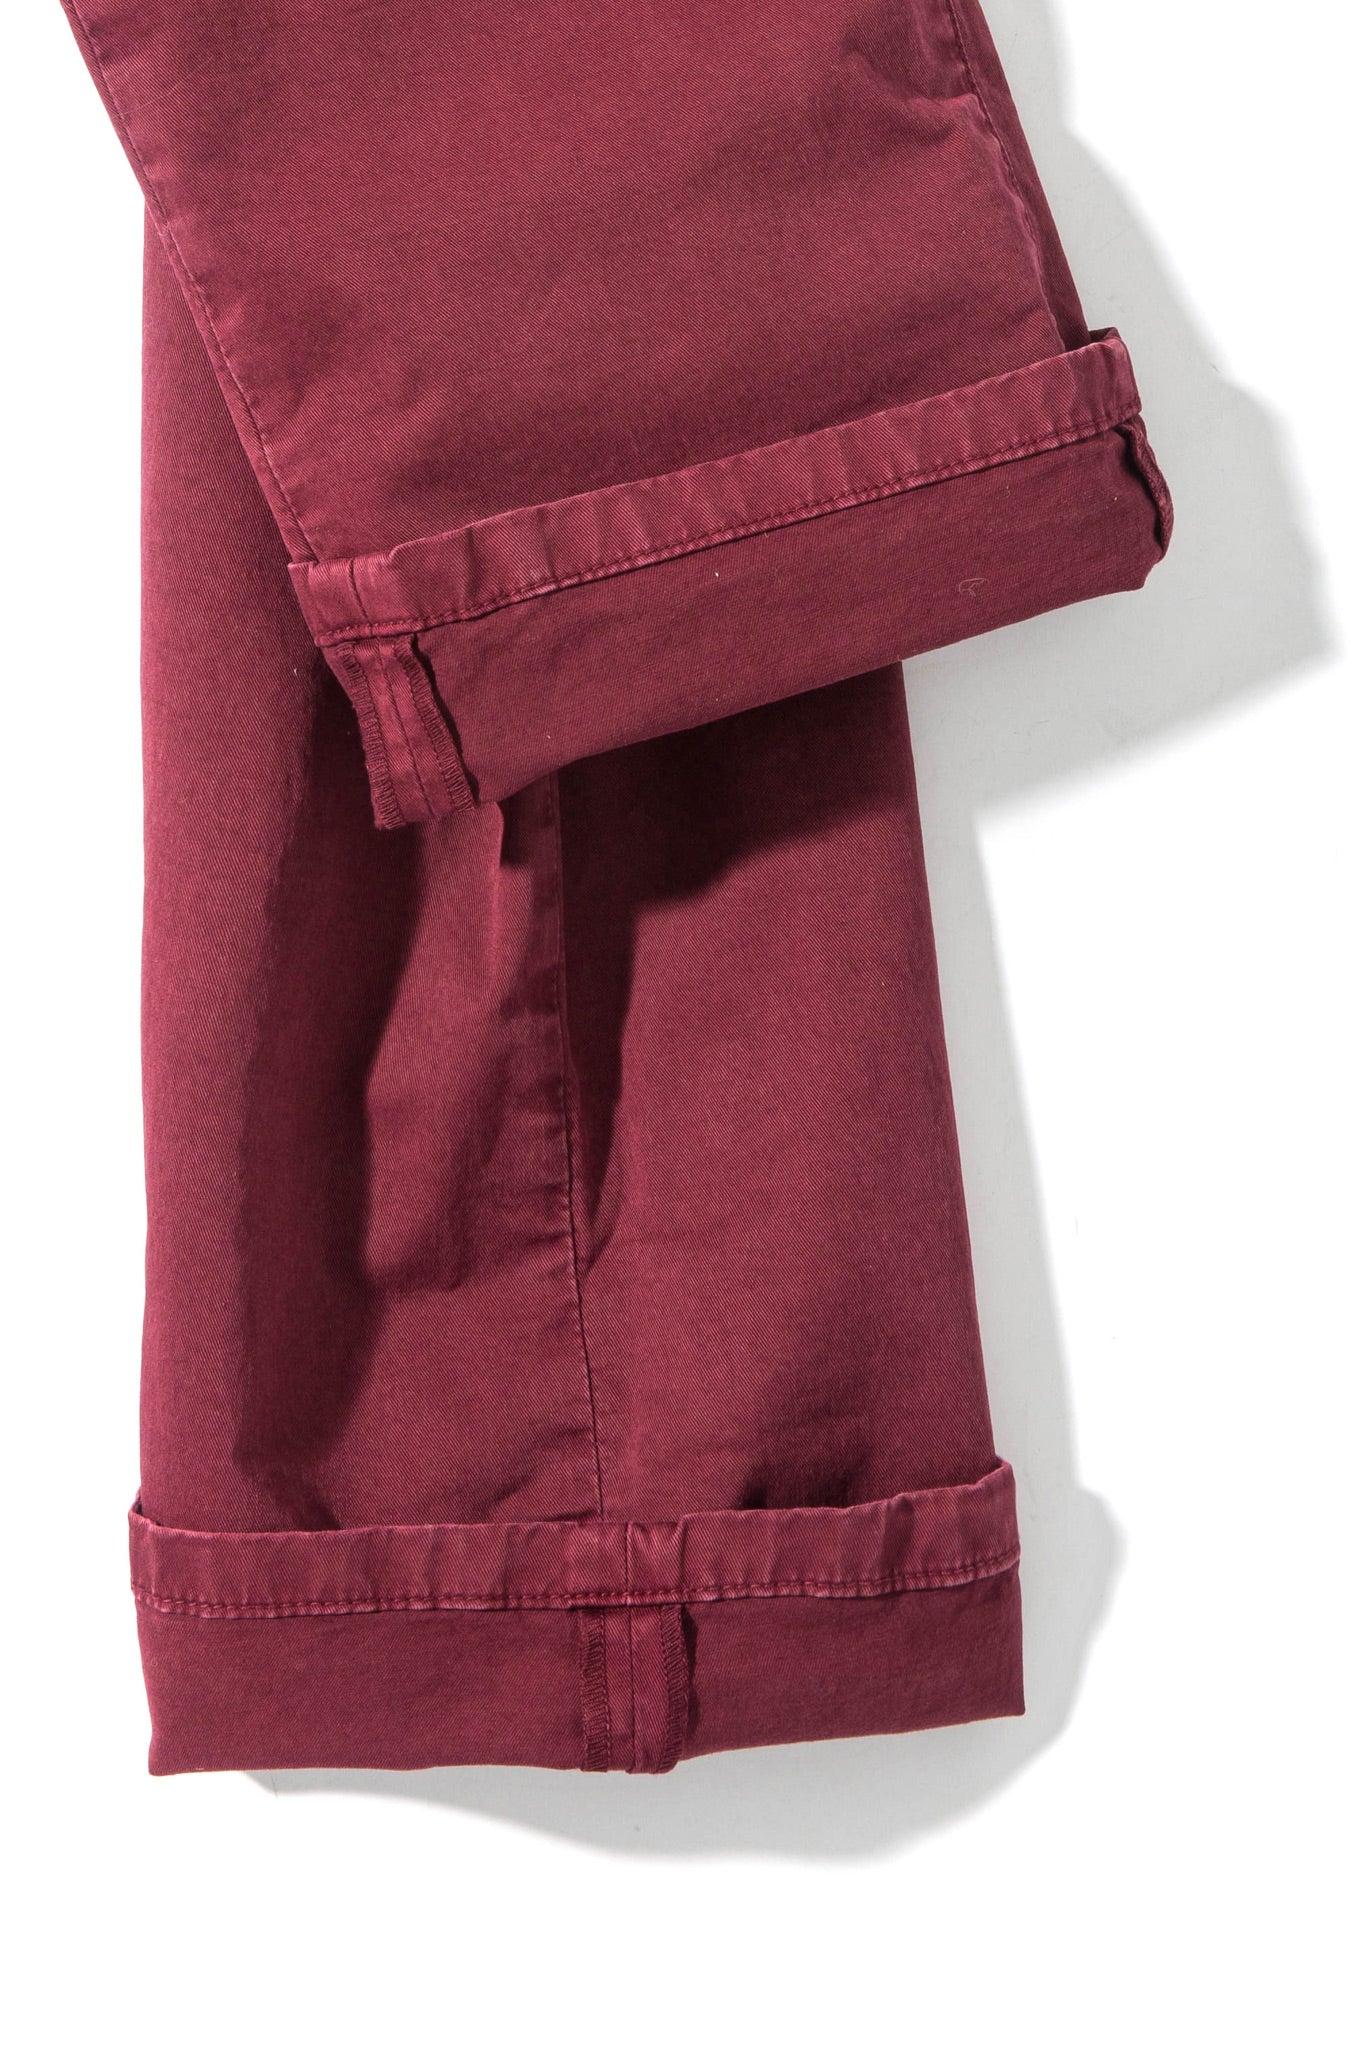 Flagstaff Stretch Cotton Twill in Bordeaux | Mens - Pants - 5 Pocket | Axels Premium Denim